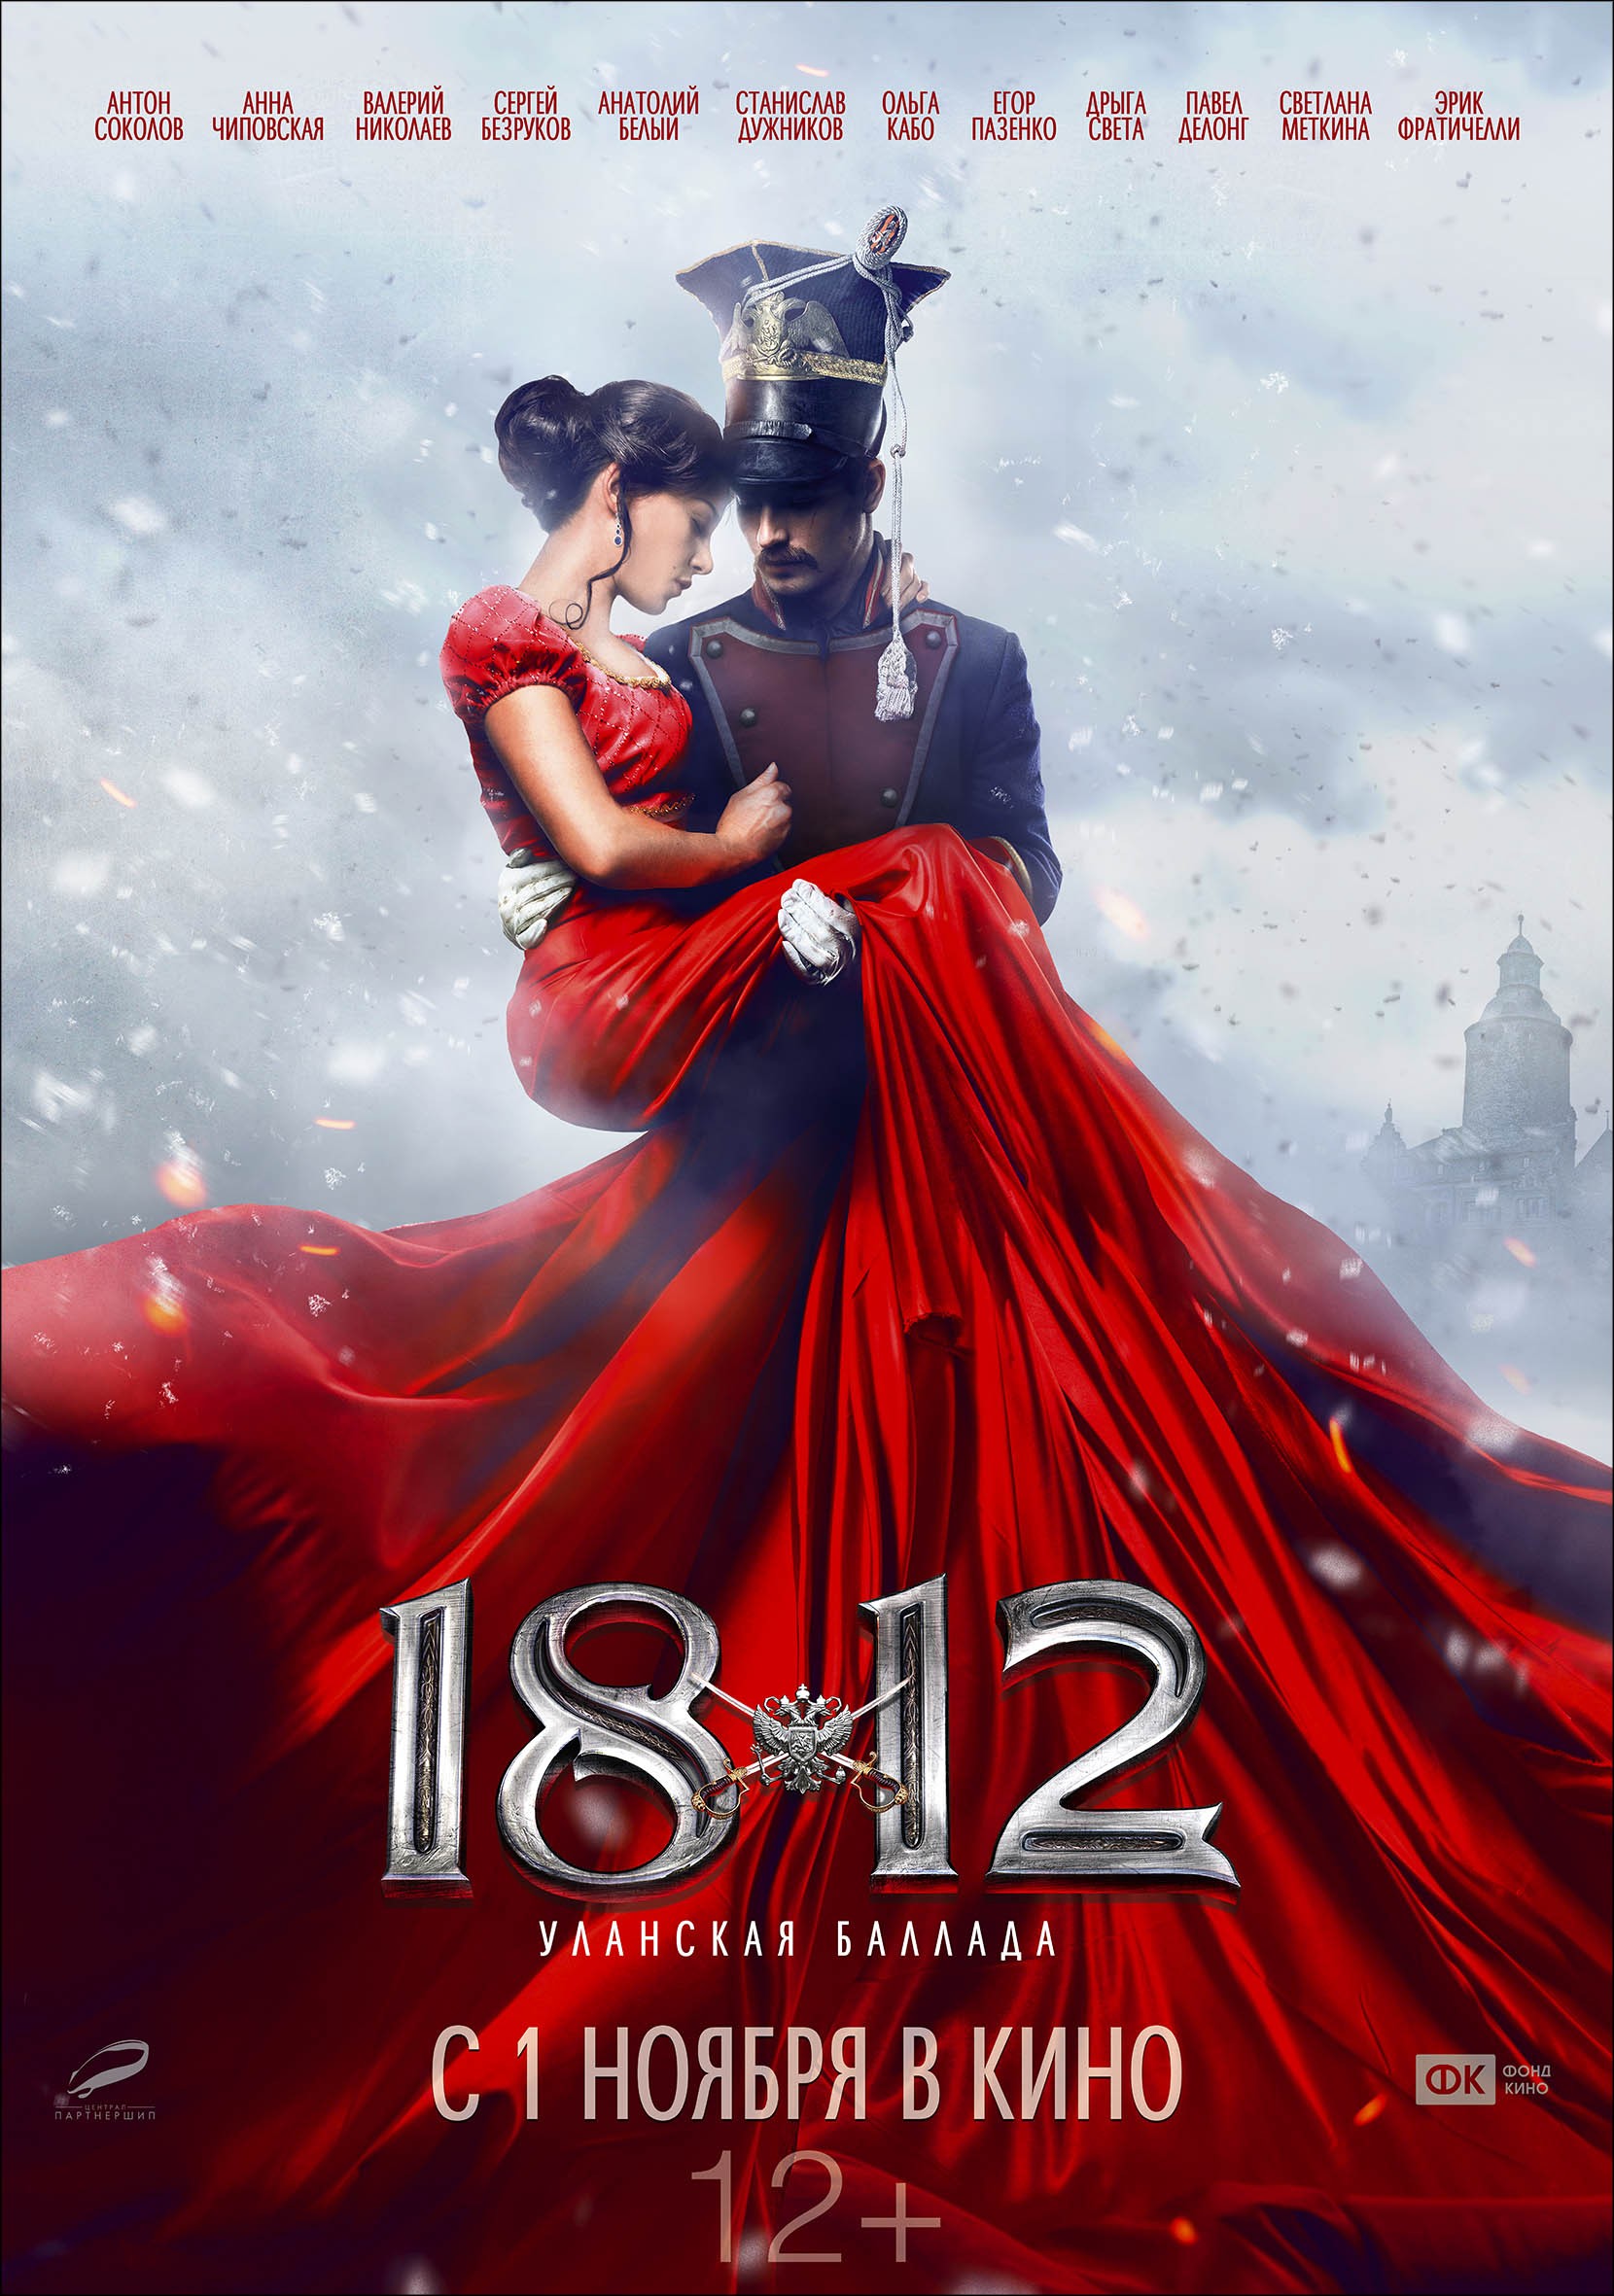 Mega Sized Movie Poster Image for 1812. Ulanskaya ballada 